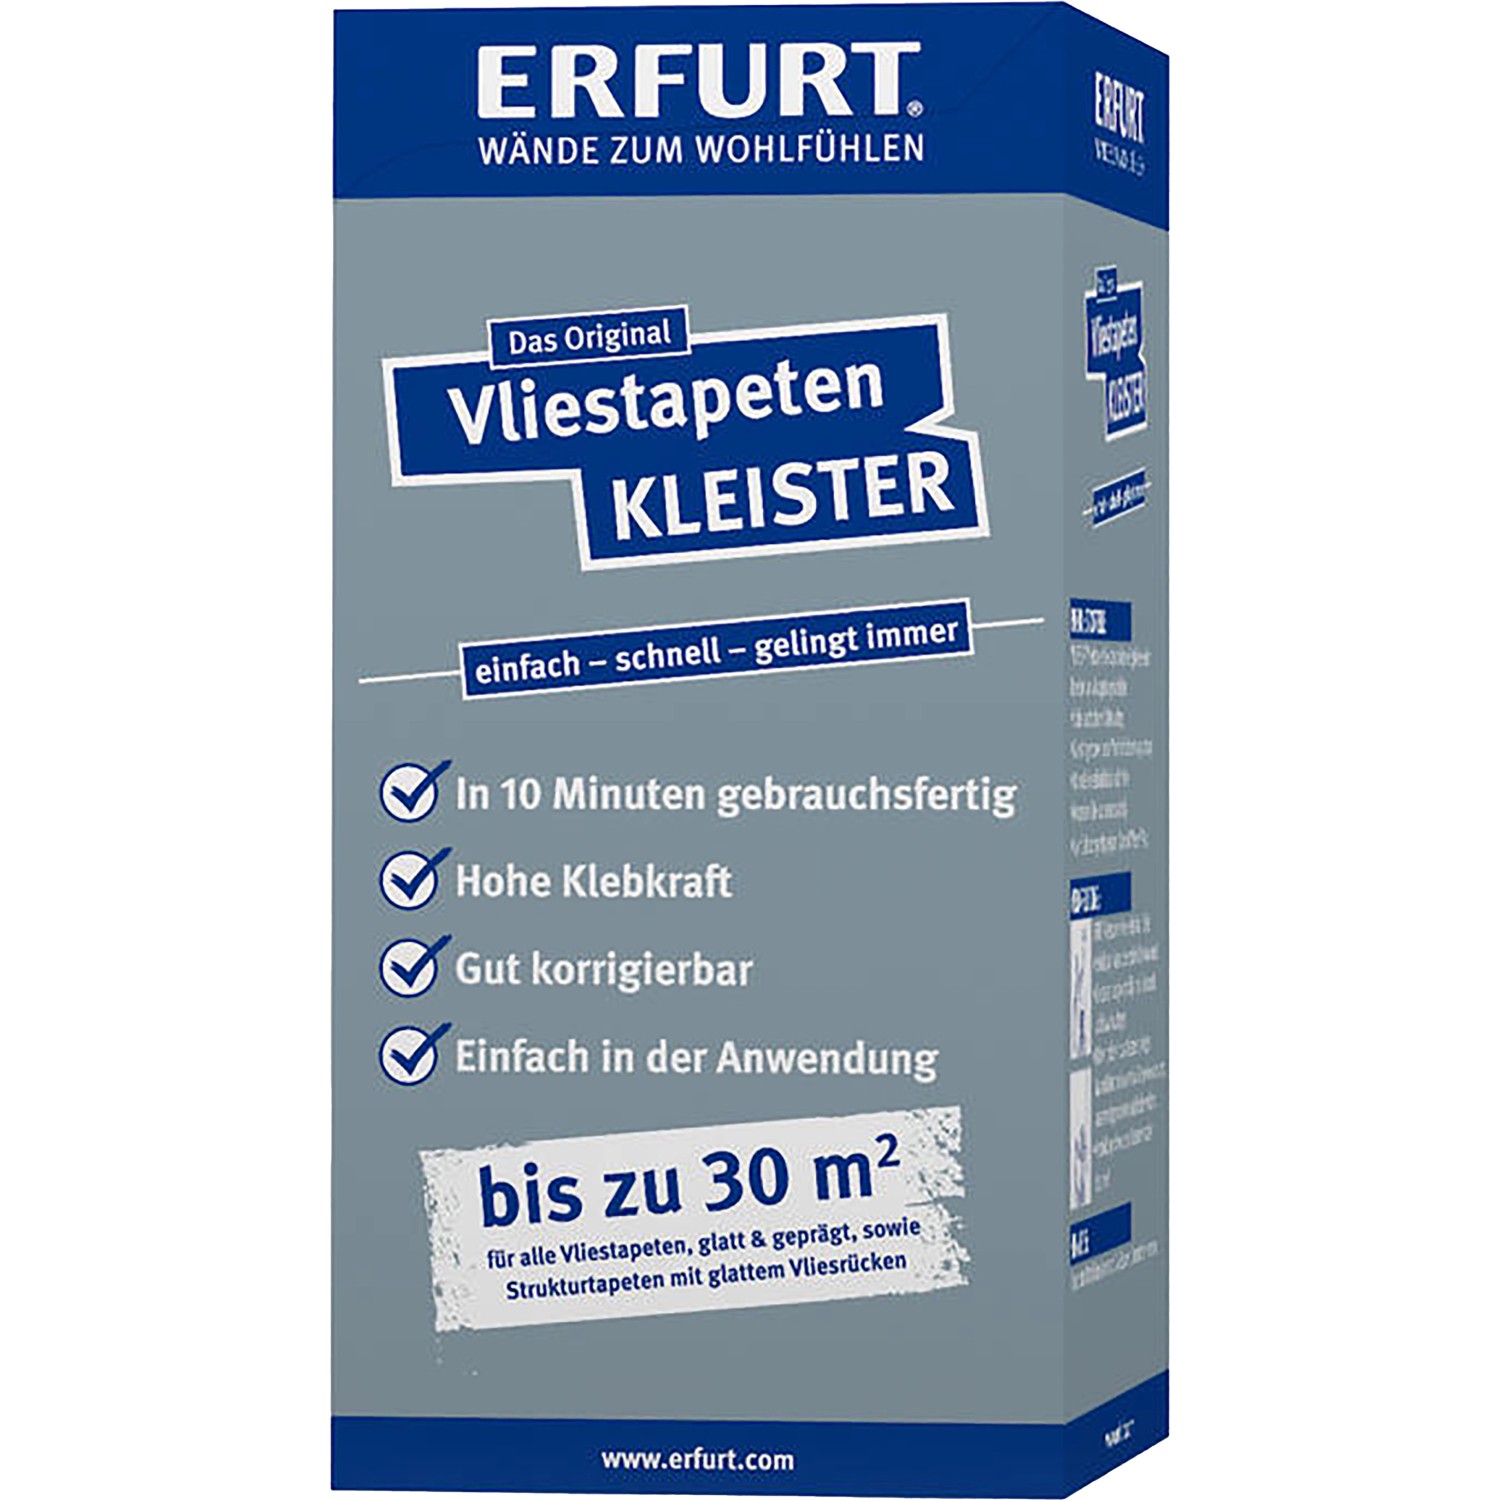 Erfurt Vliestapeten-Kleister 200 g